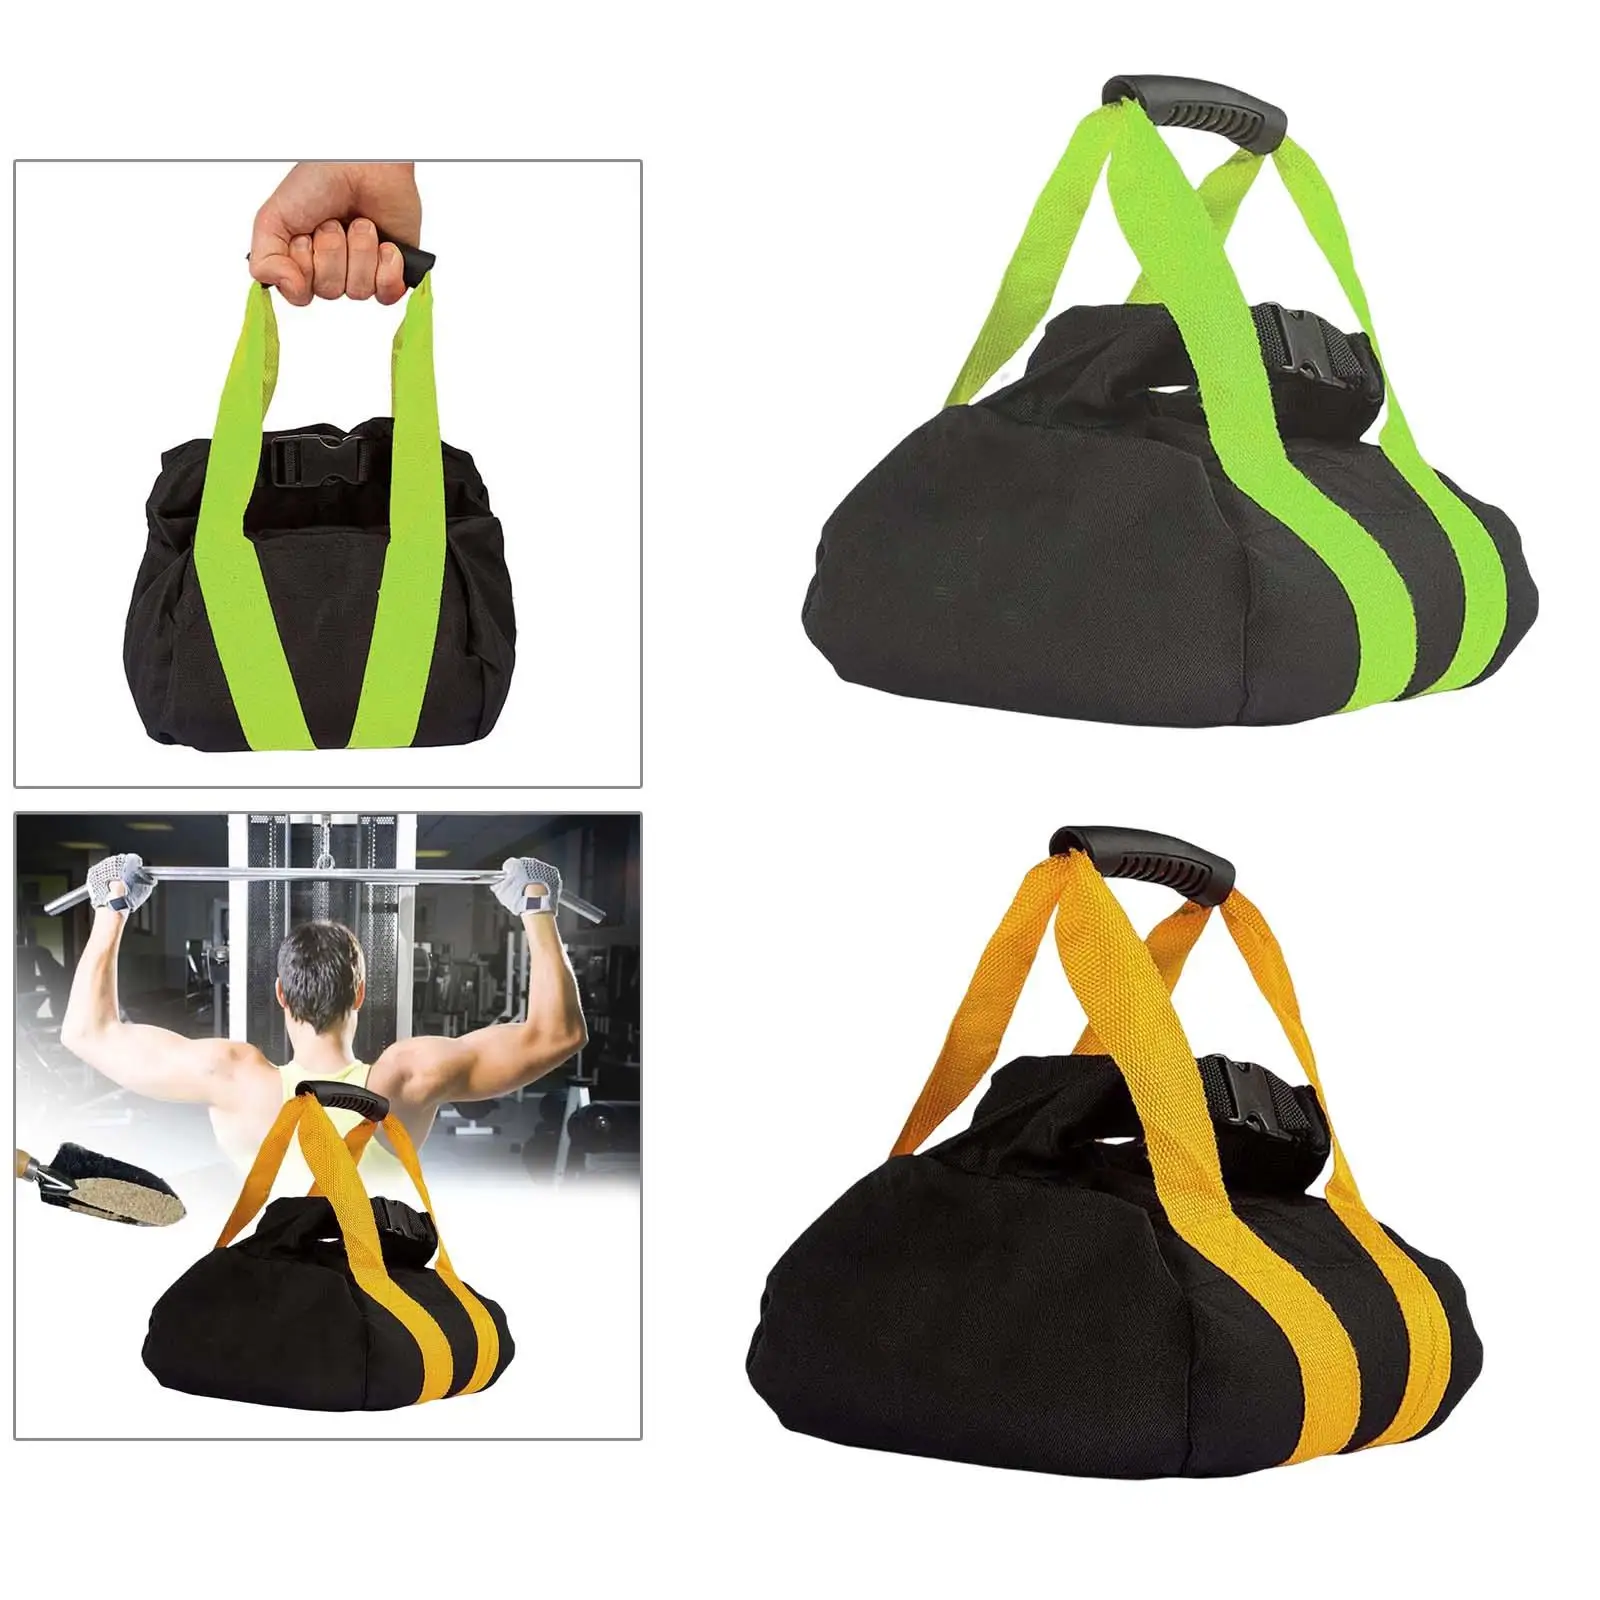 Weight Sandbag Adjustable Fitness Equipment Bodybuilding Portable Weightlifting Sandbag Power Sandbag for Boxing Training